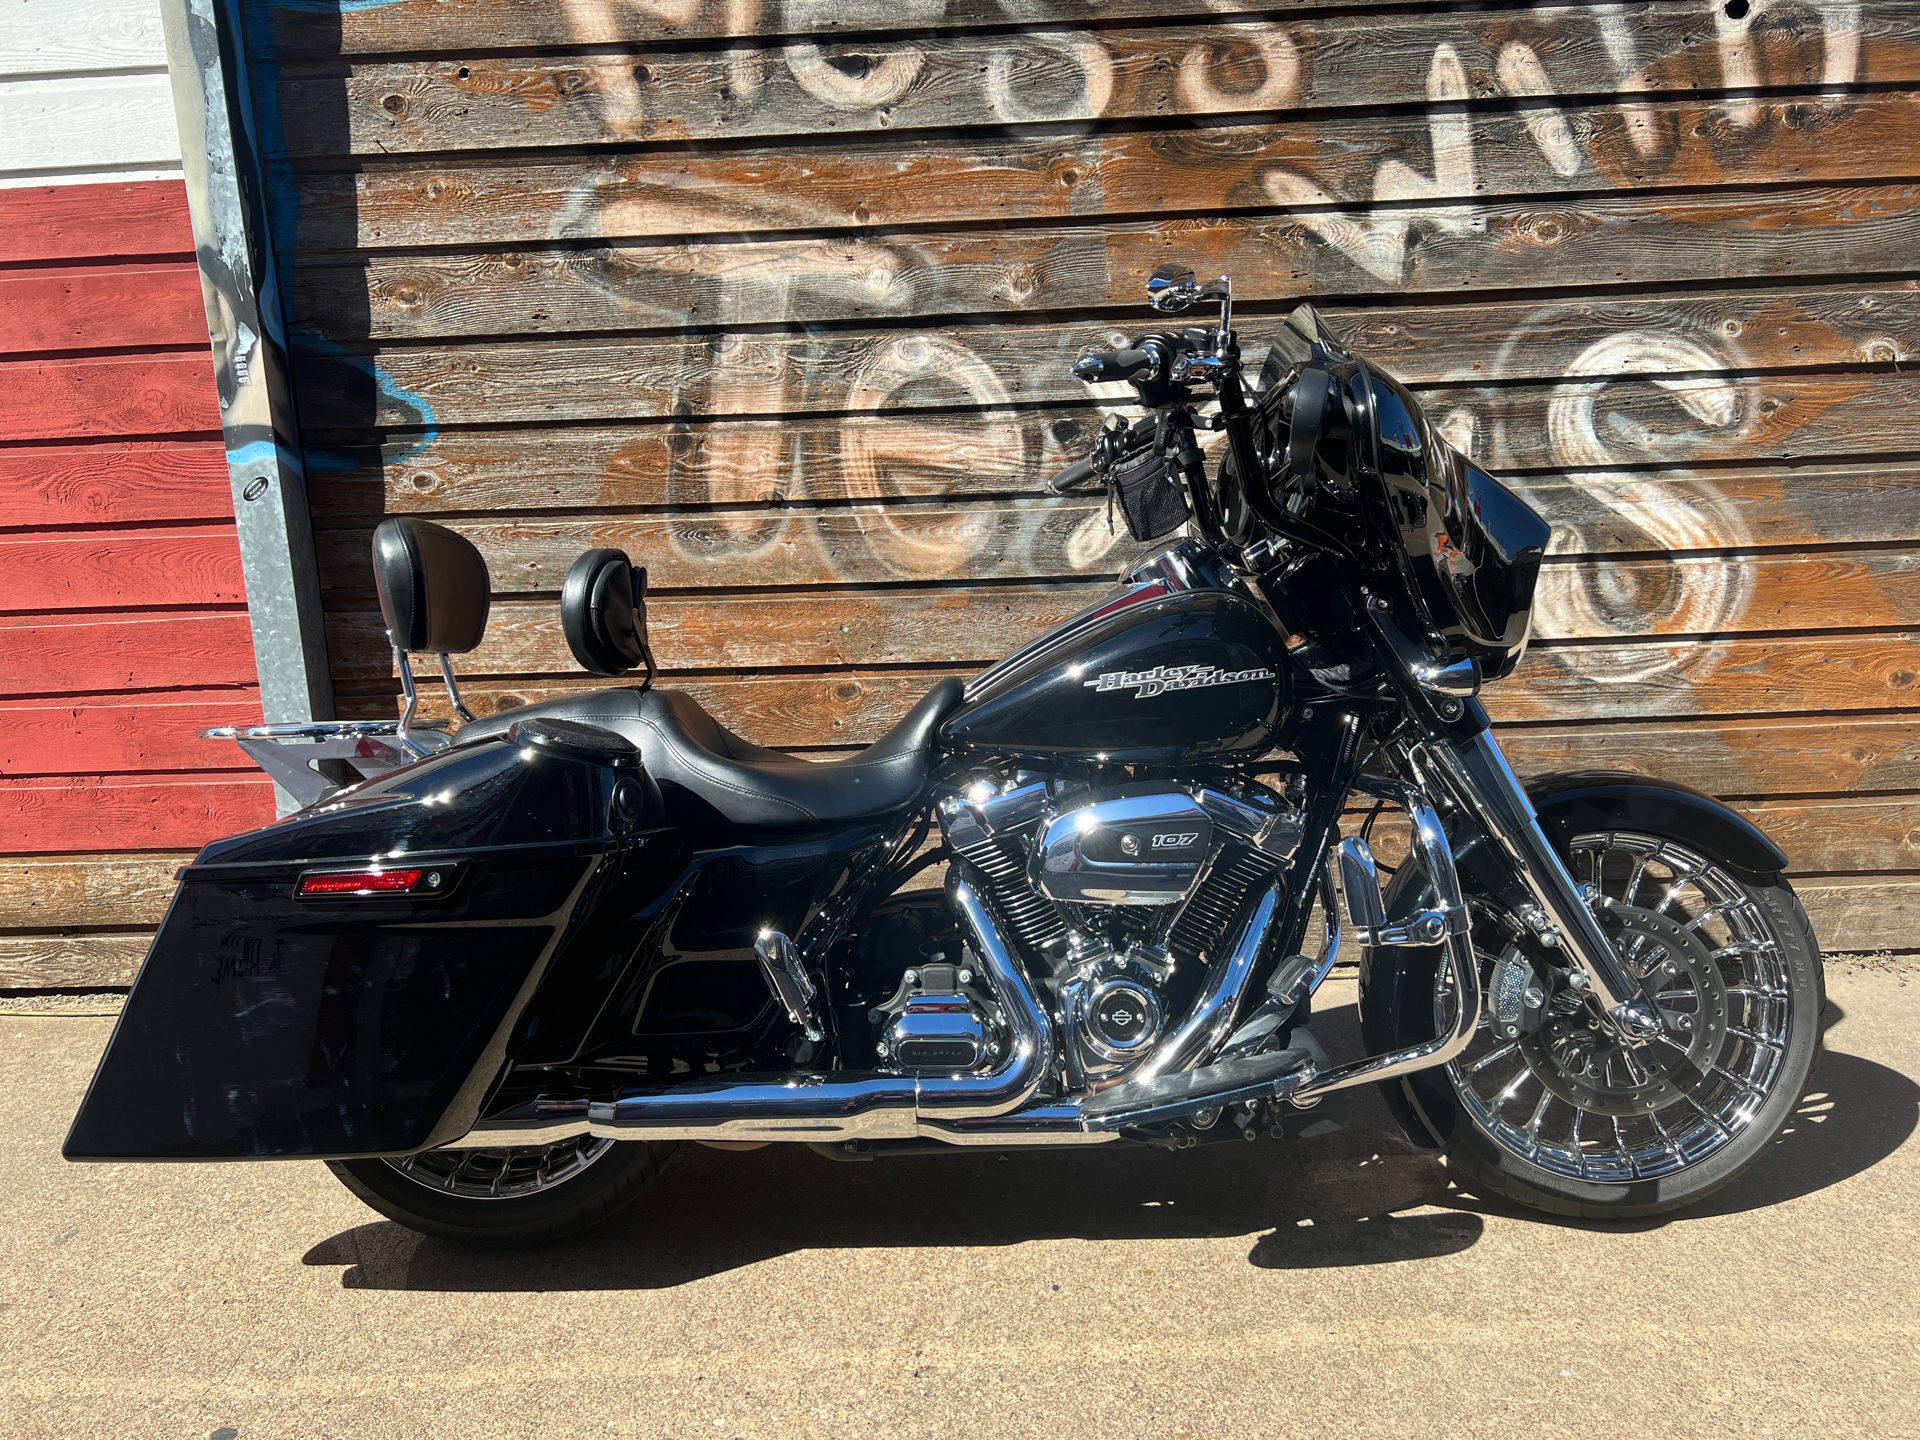 2017 Harley-Davidson Street Glide® Special in Dallas, Texas - Photo 1